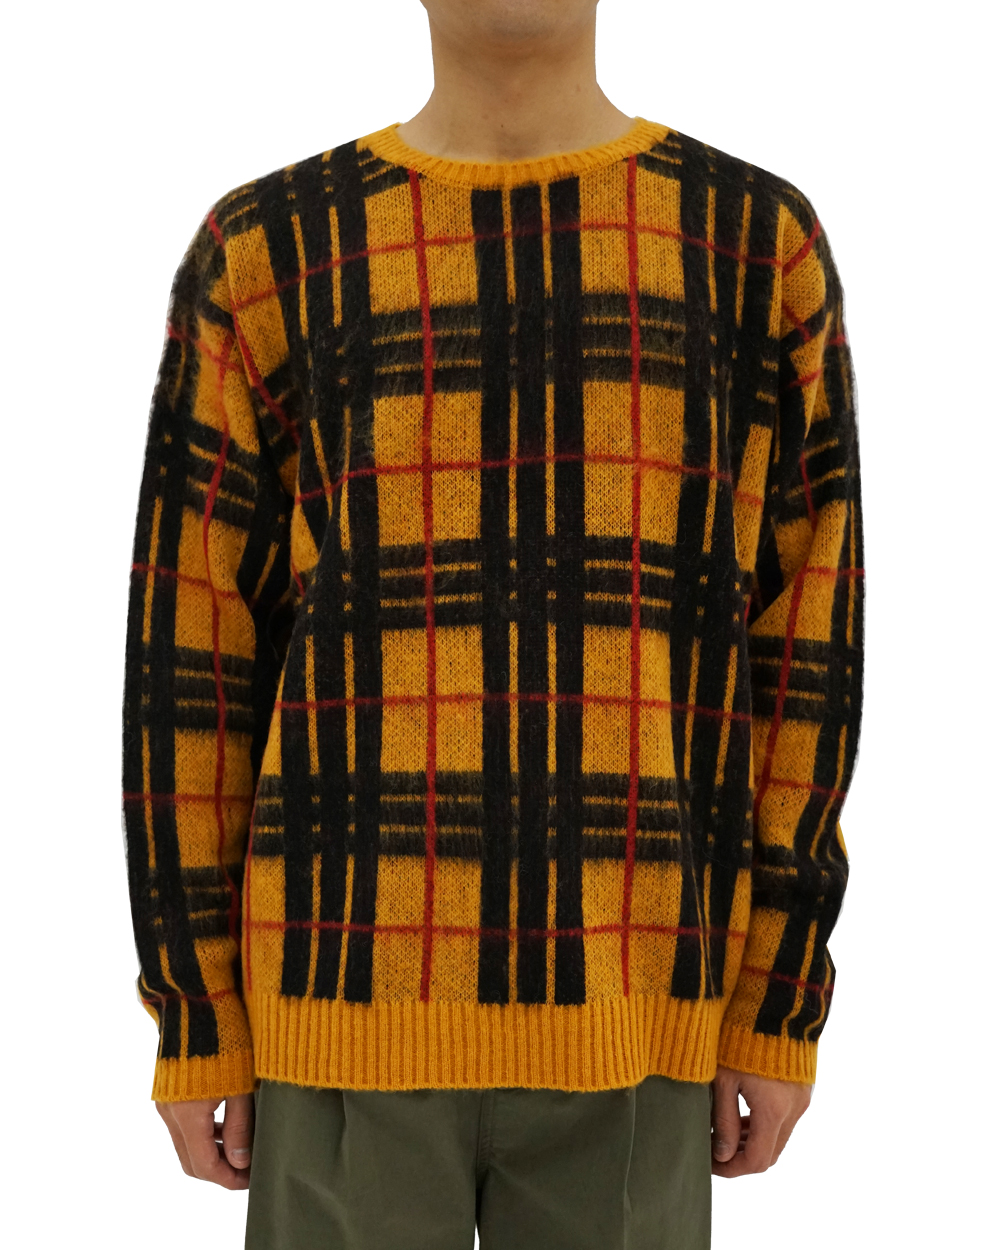 Jacquard Mohair Sweater (Yellow)